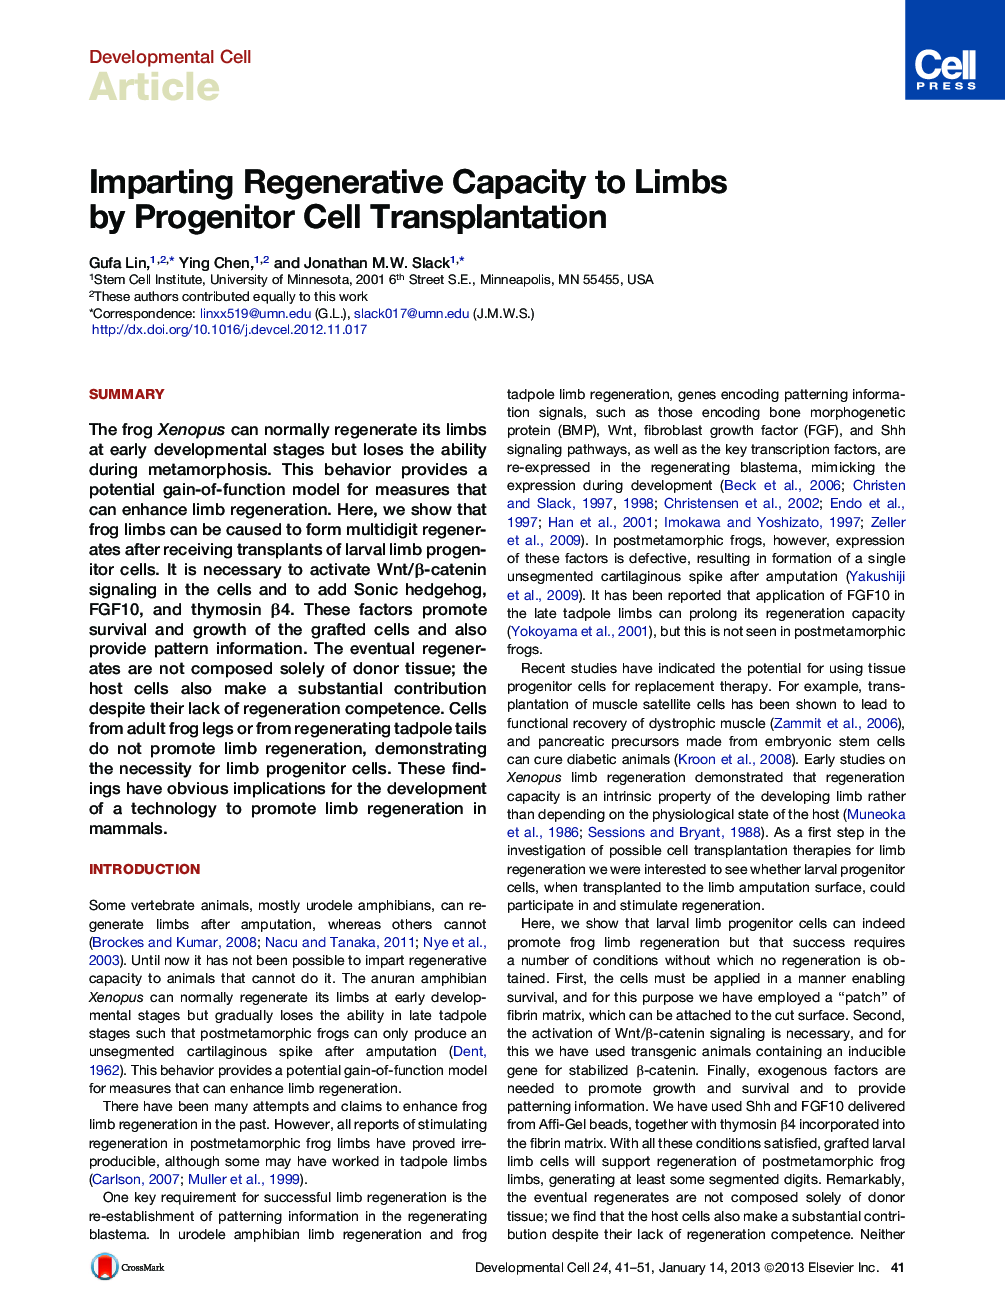 Imparting Regenerative Capacity to Limbs by Progenitor Cell Transplantation